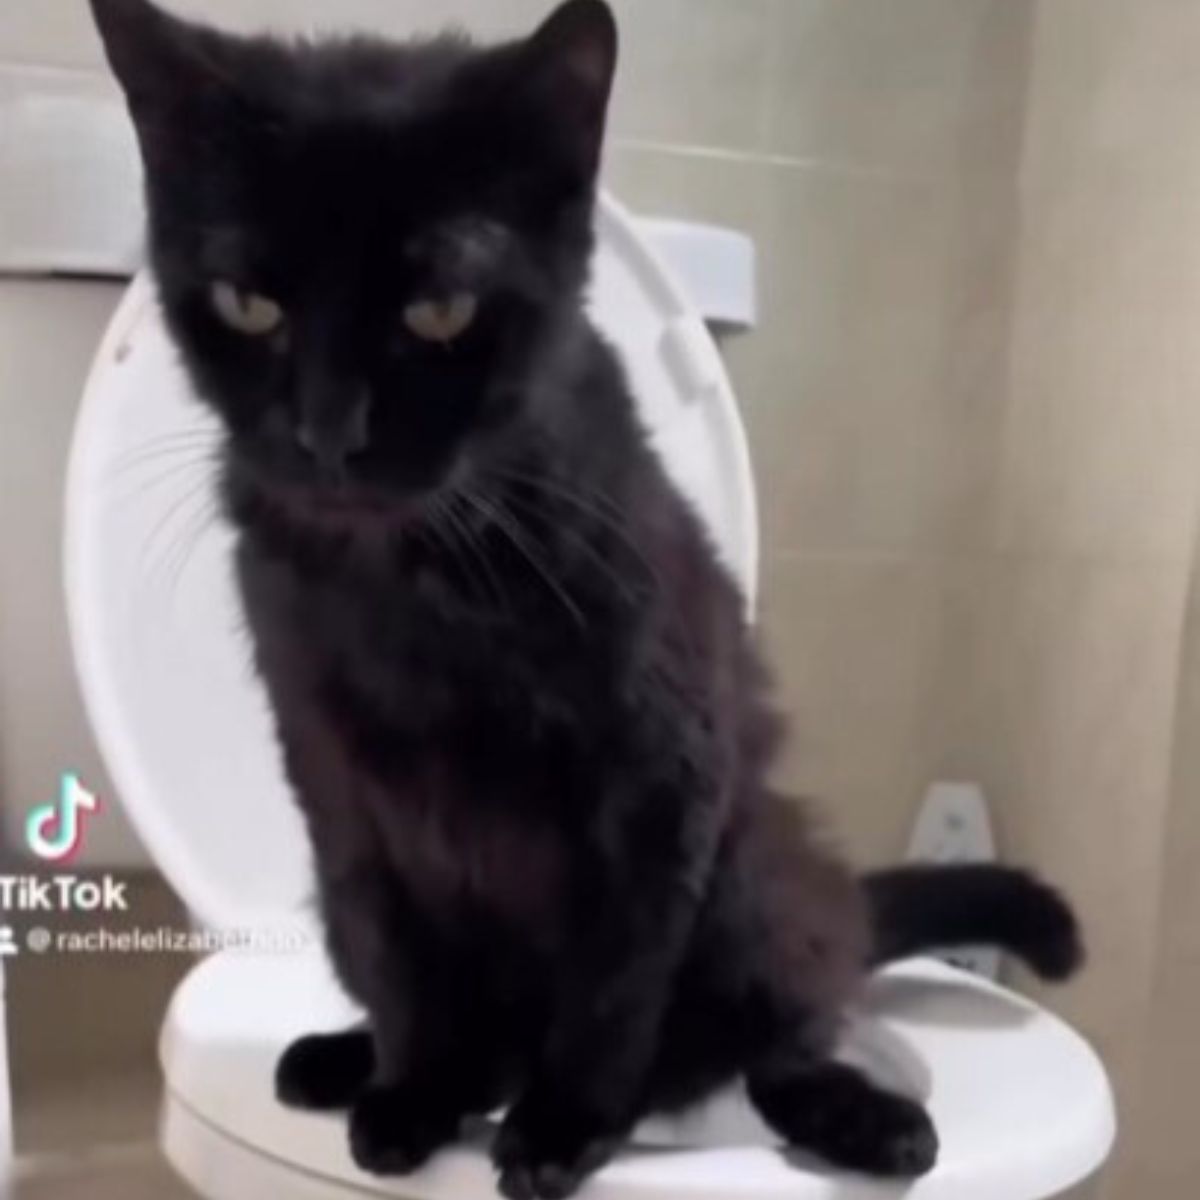 photo of black cat on toilet